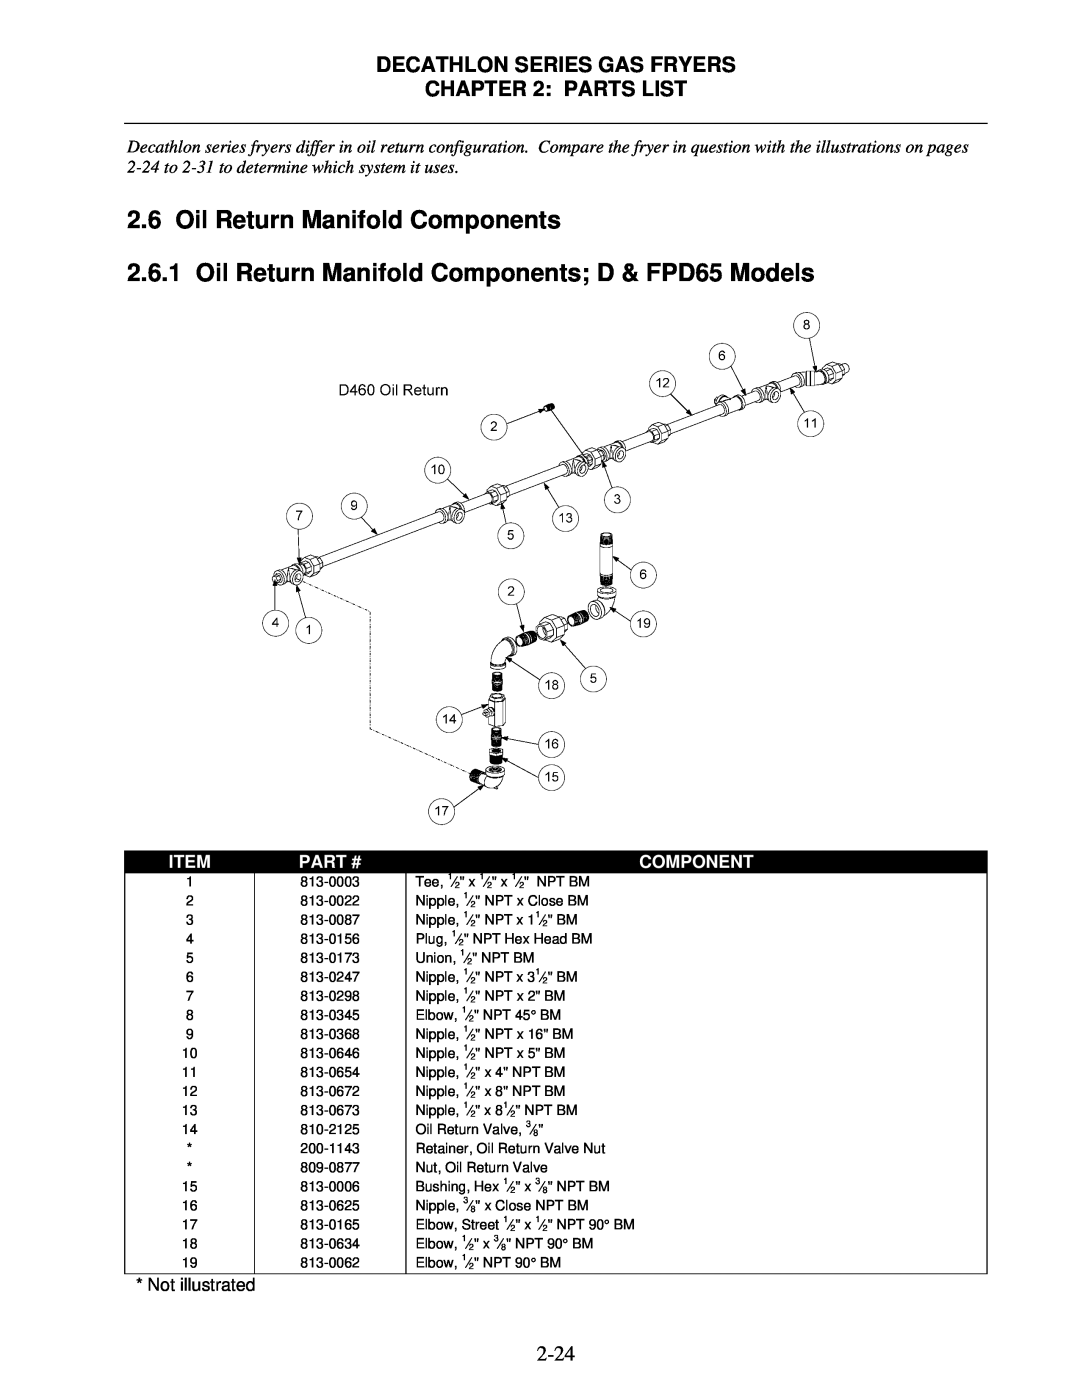 Frymaster FPD, SCFD manual Oil Return Manifold Components, Decathlon Series Gas Fryers Parts List, Item, Part # 